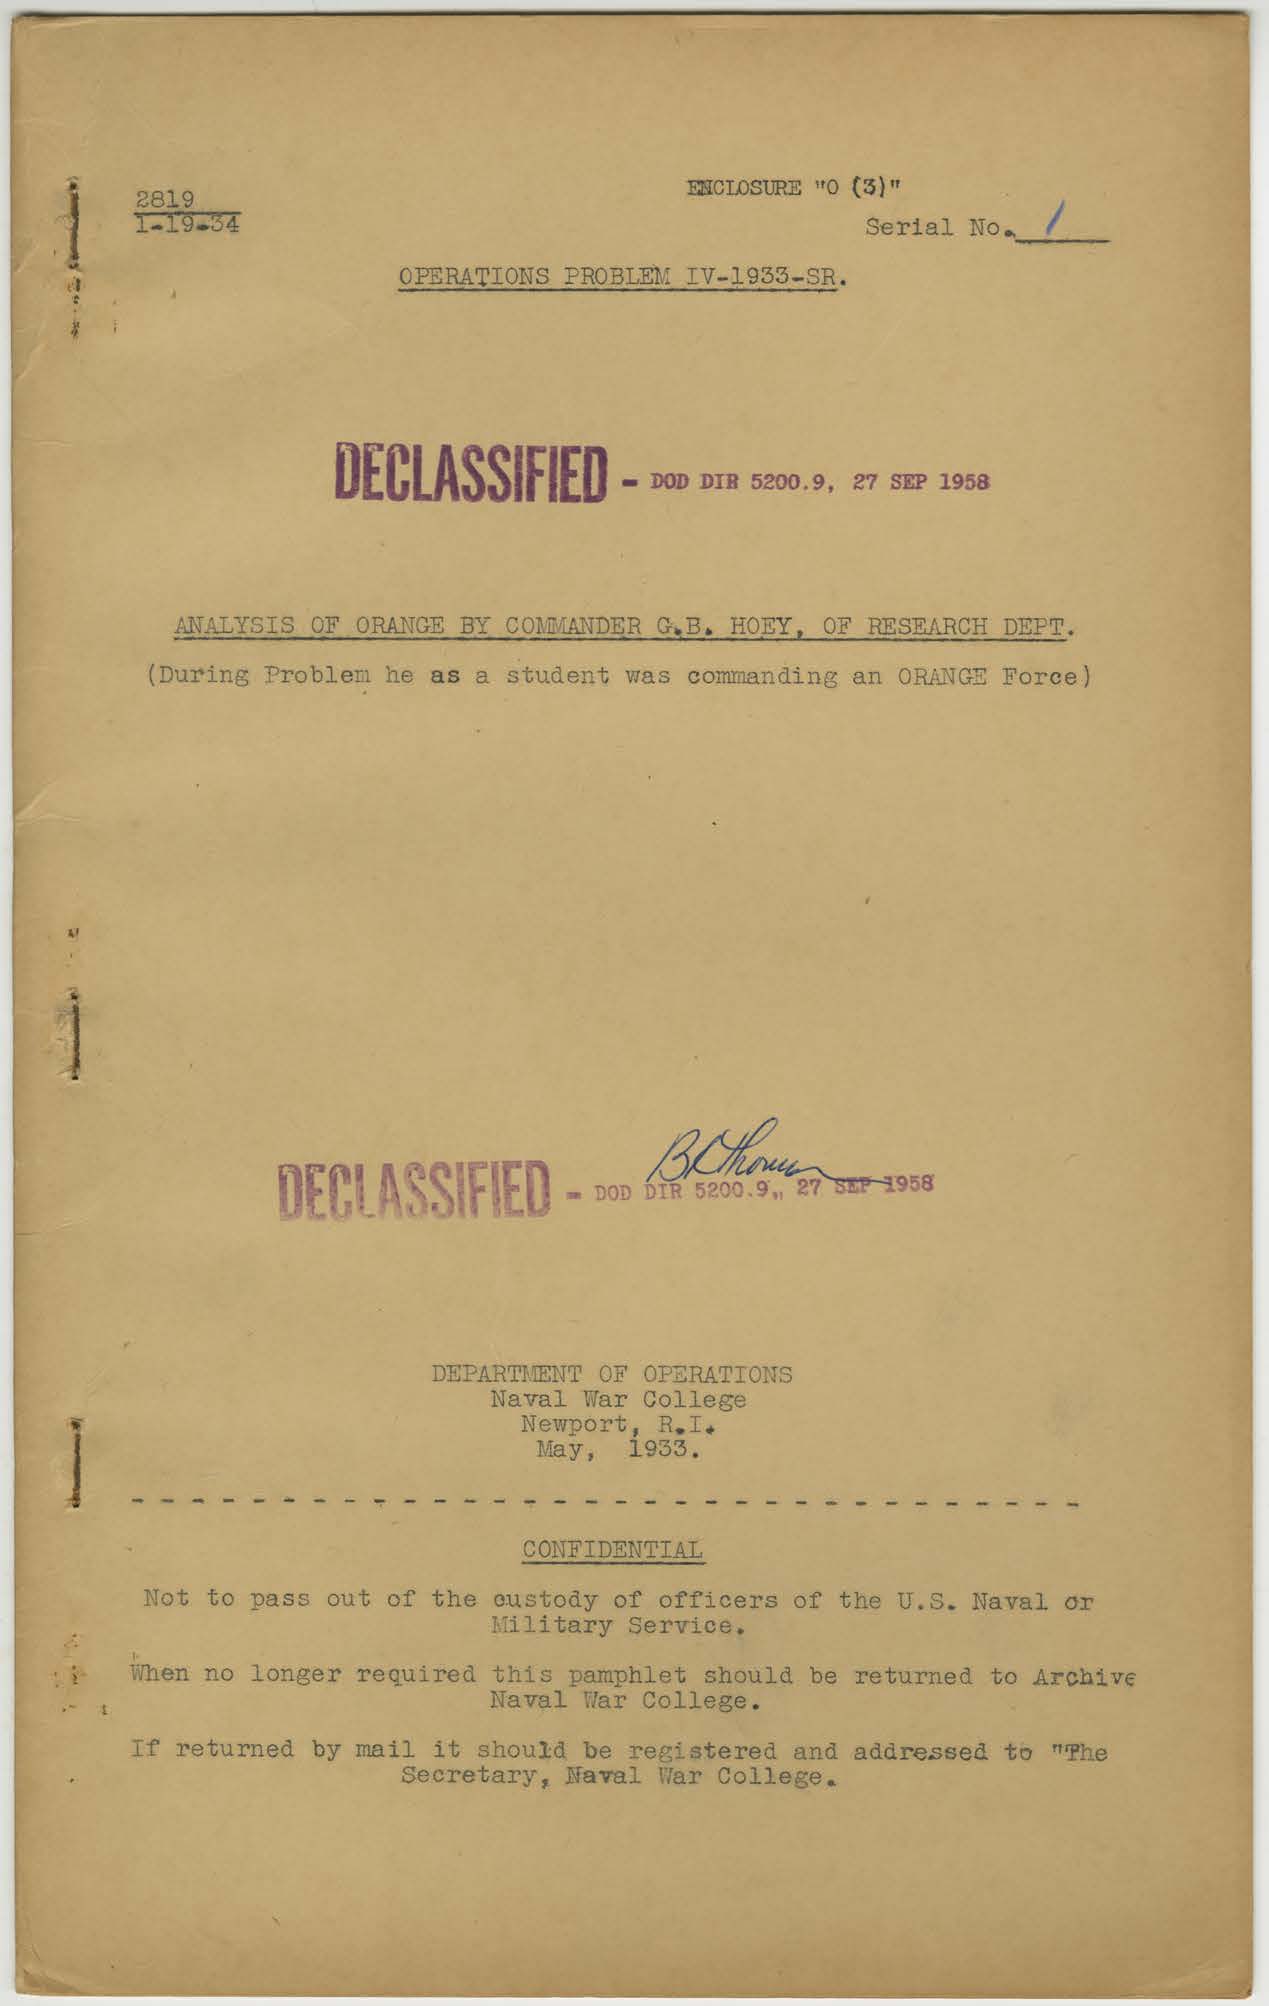 Operations Problem IV - 1933: Analysis of ORANGE by Commander G.B. Hoey